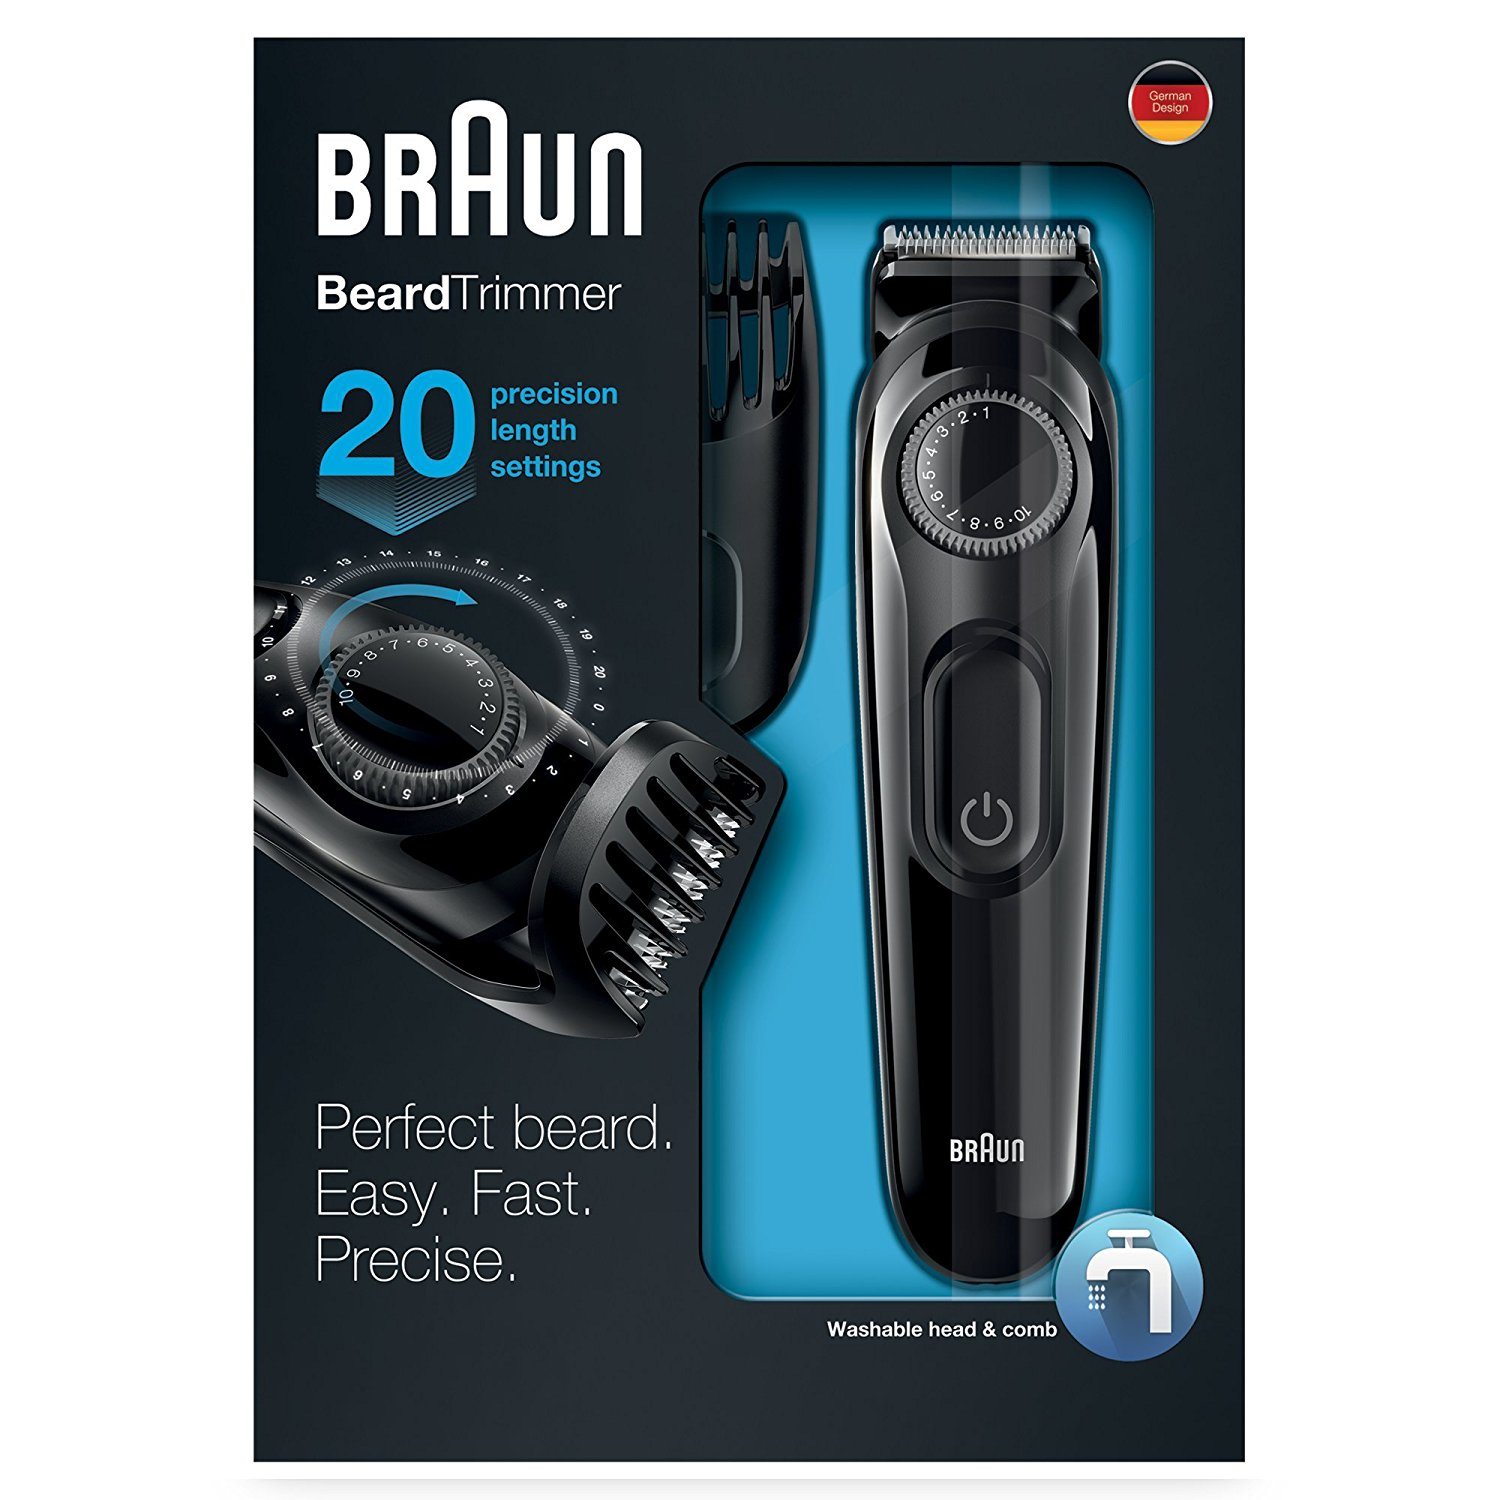 Braun BT3020 Beard Trimmer in box